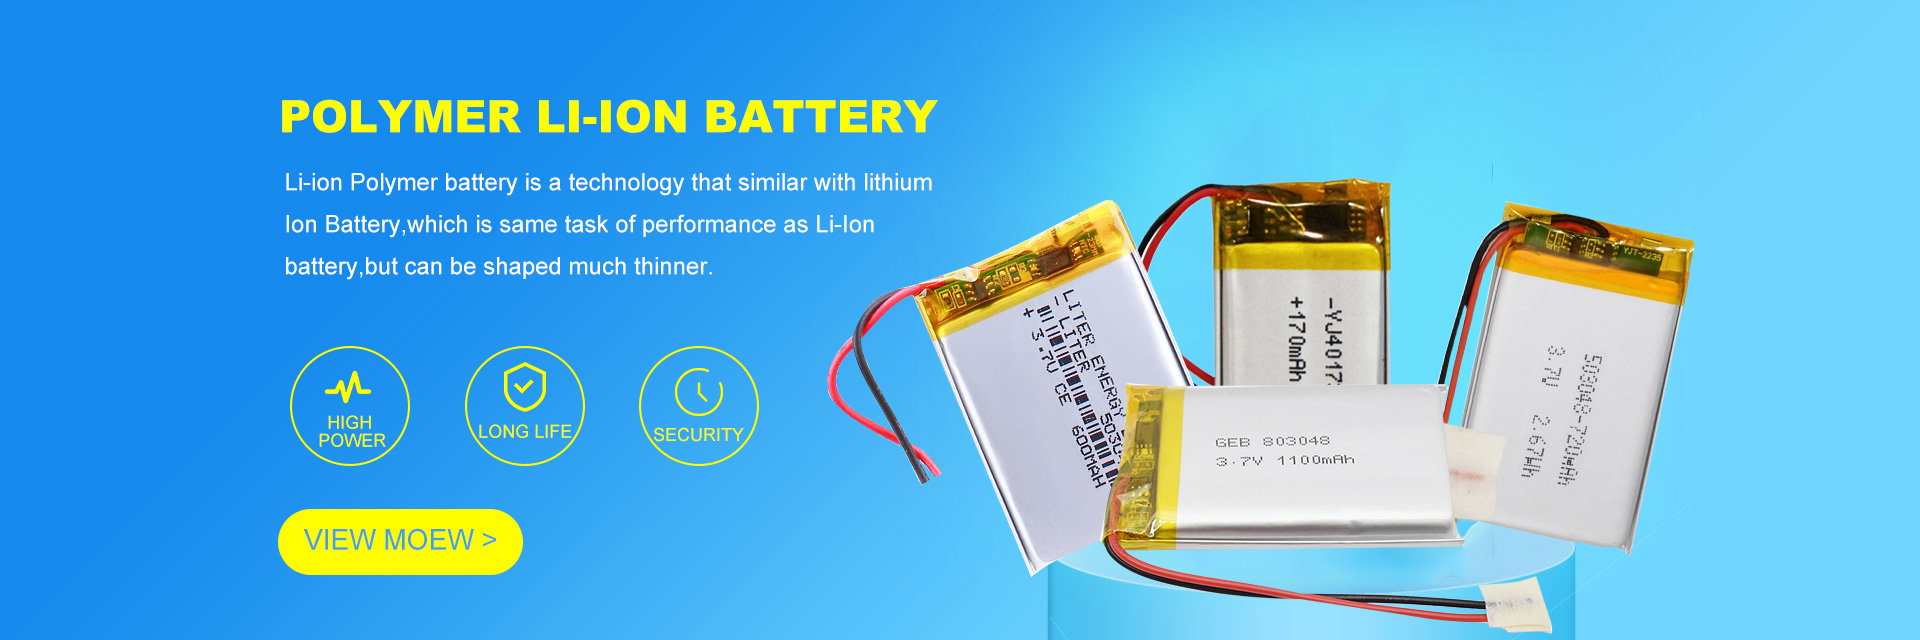 Polymer Li-Ion Battery Manufacturers